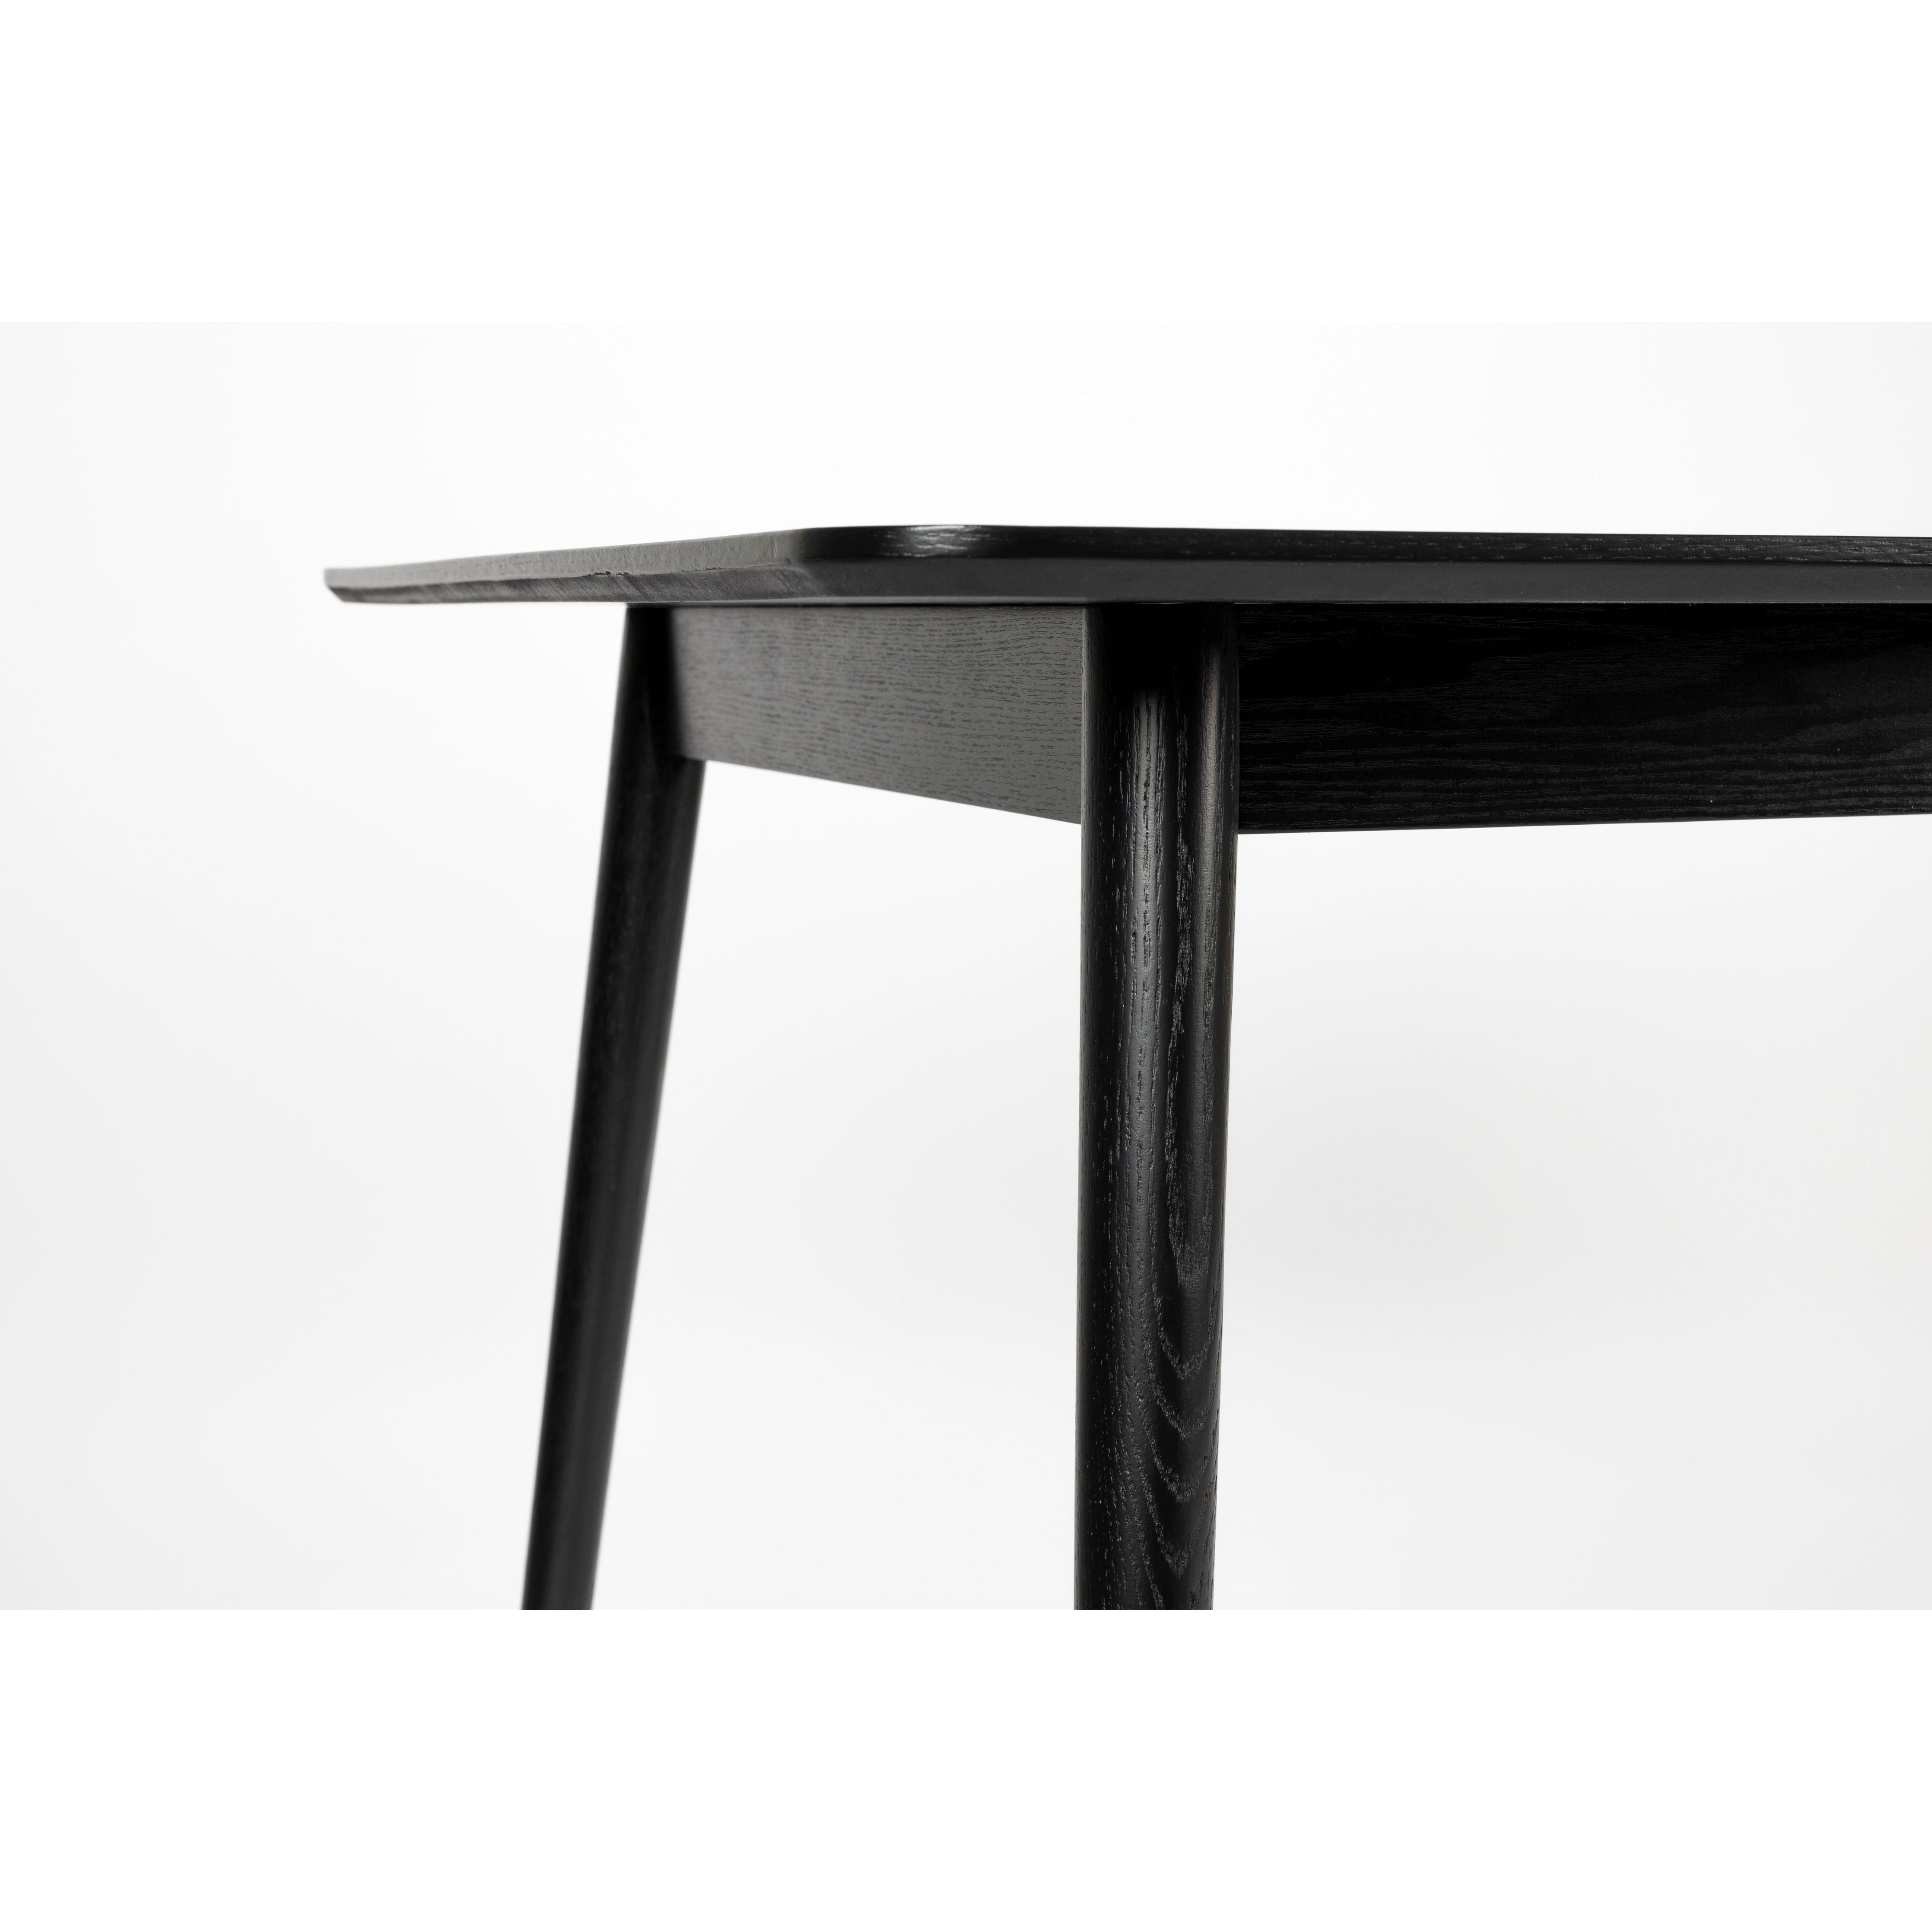 Table fabio 160x80 black